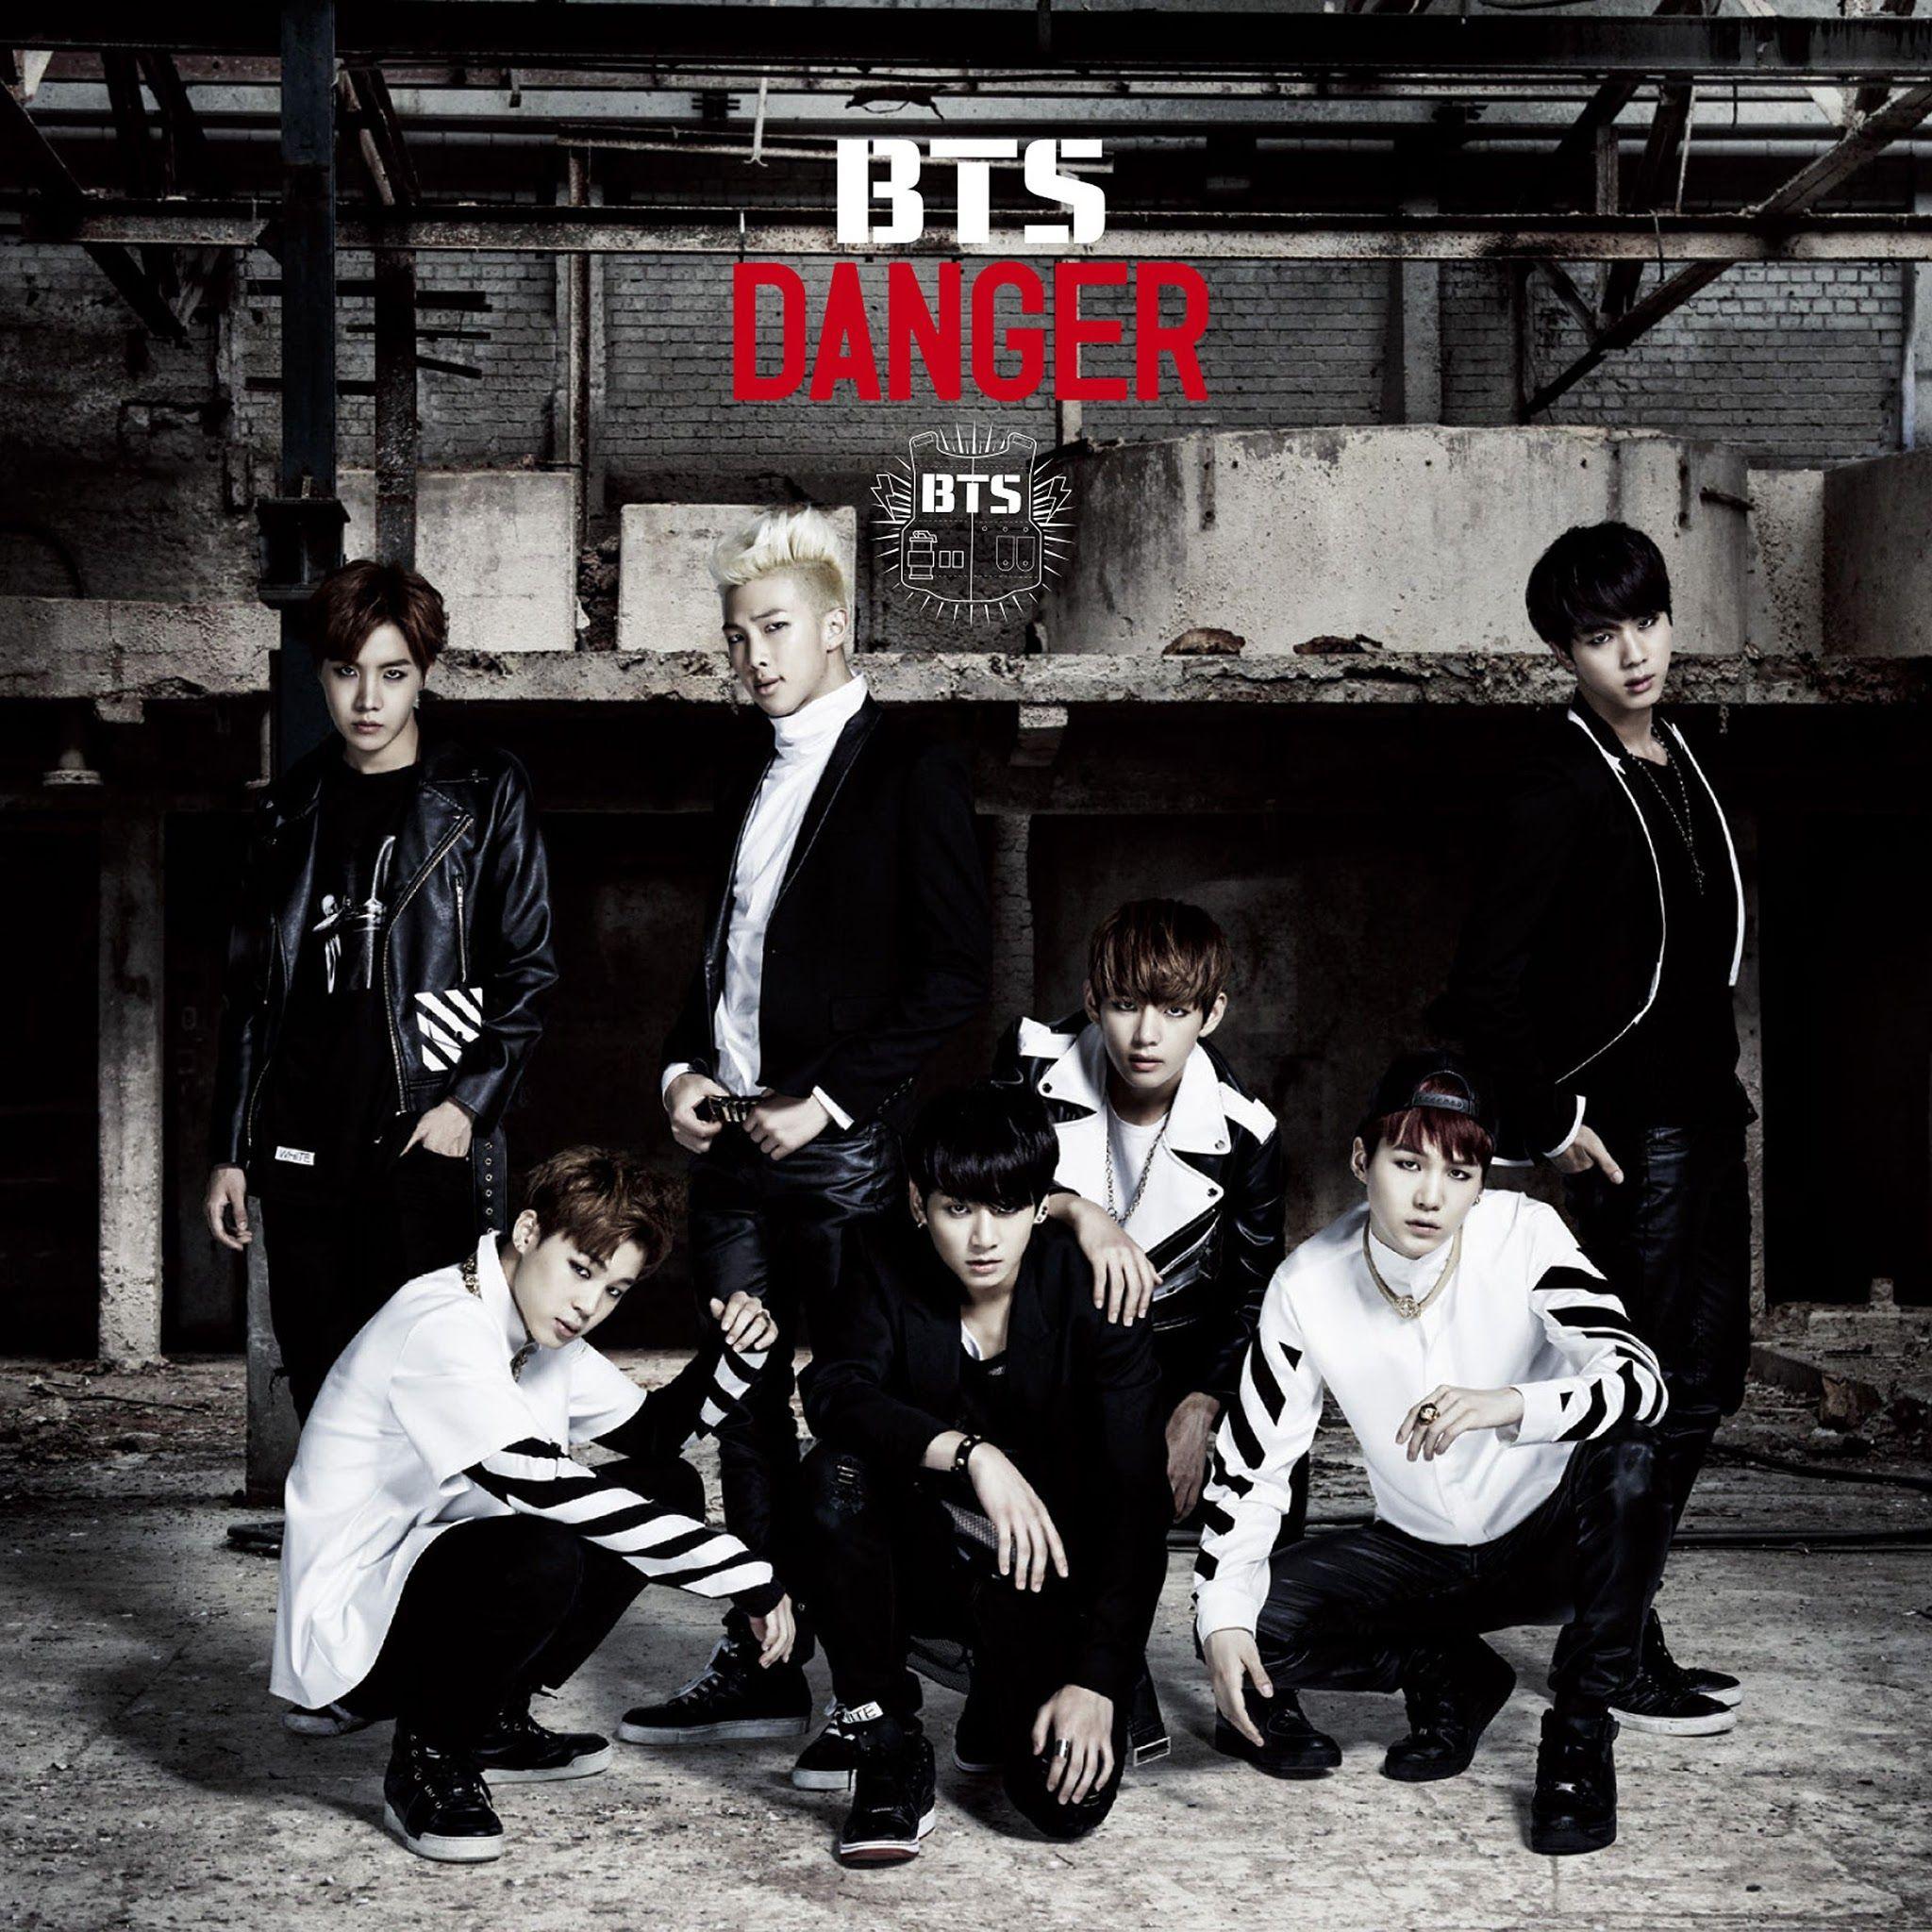 Download BTS Danger 2048 x 2048 Wallpaper boys